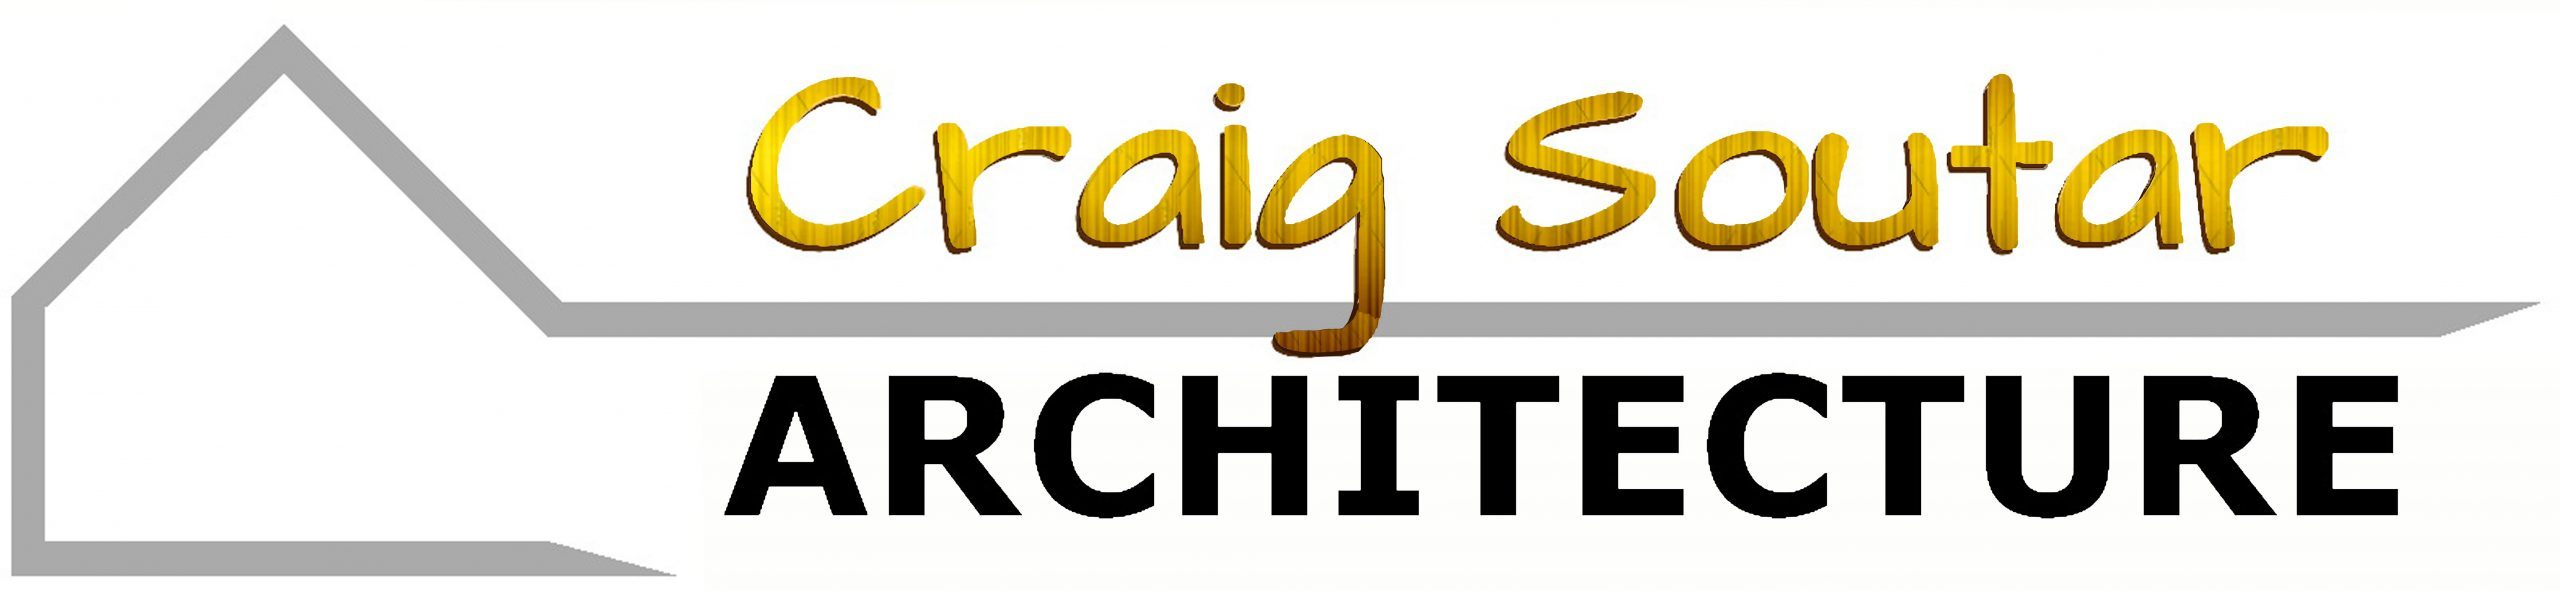 Craig Soutar Architect Isle of Wight - Logo